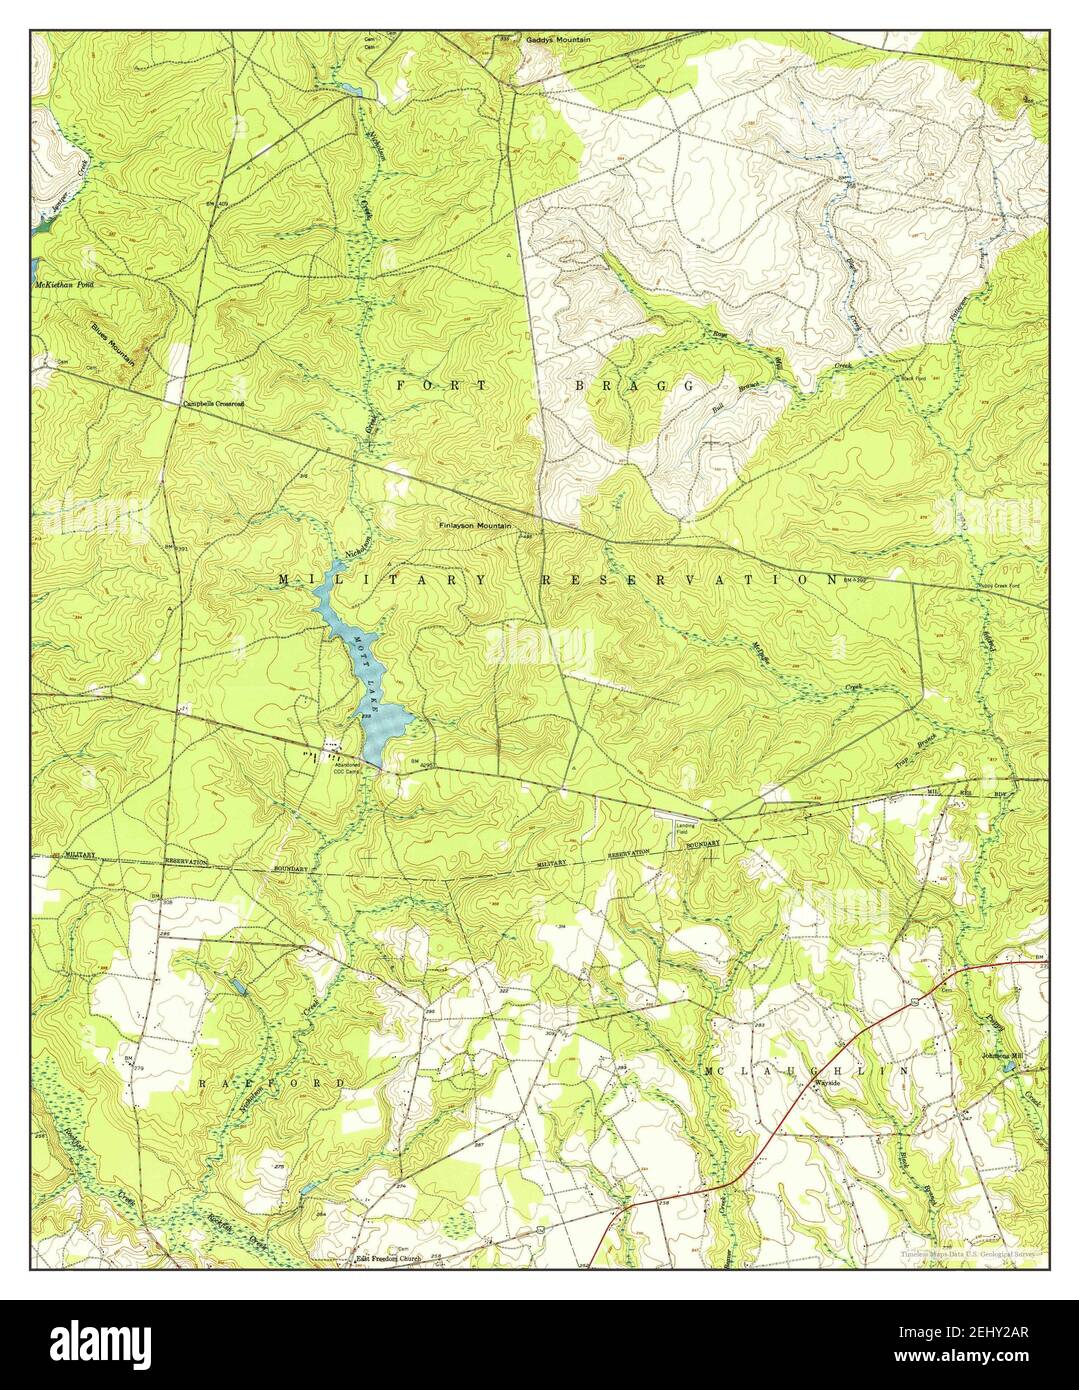 Nicholson Creek North Carolina Map 1950 124000 United States Of America By Timeless Maps 2348